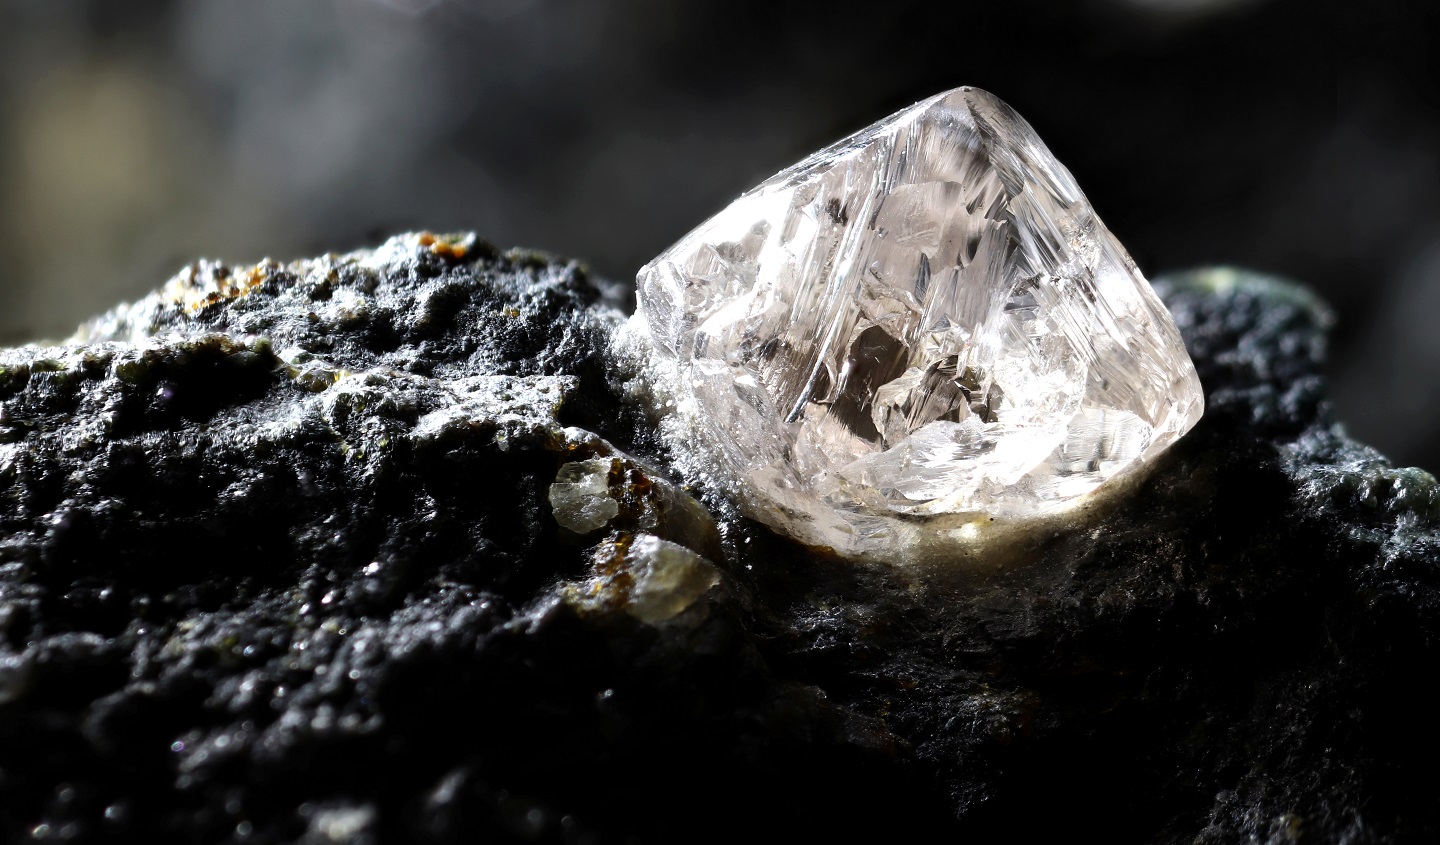 Anglo American considers sale of De Beers diamond business